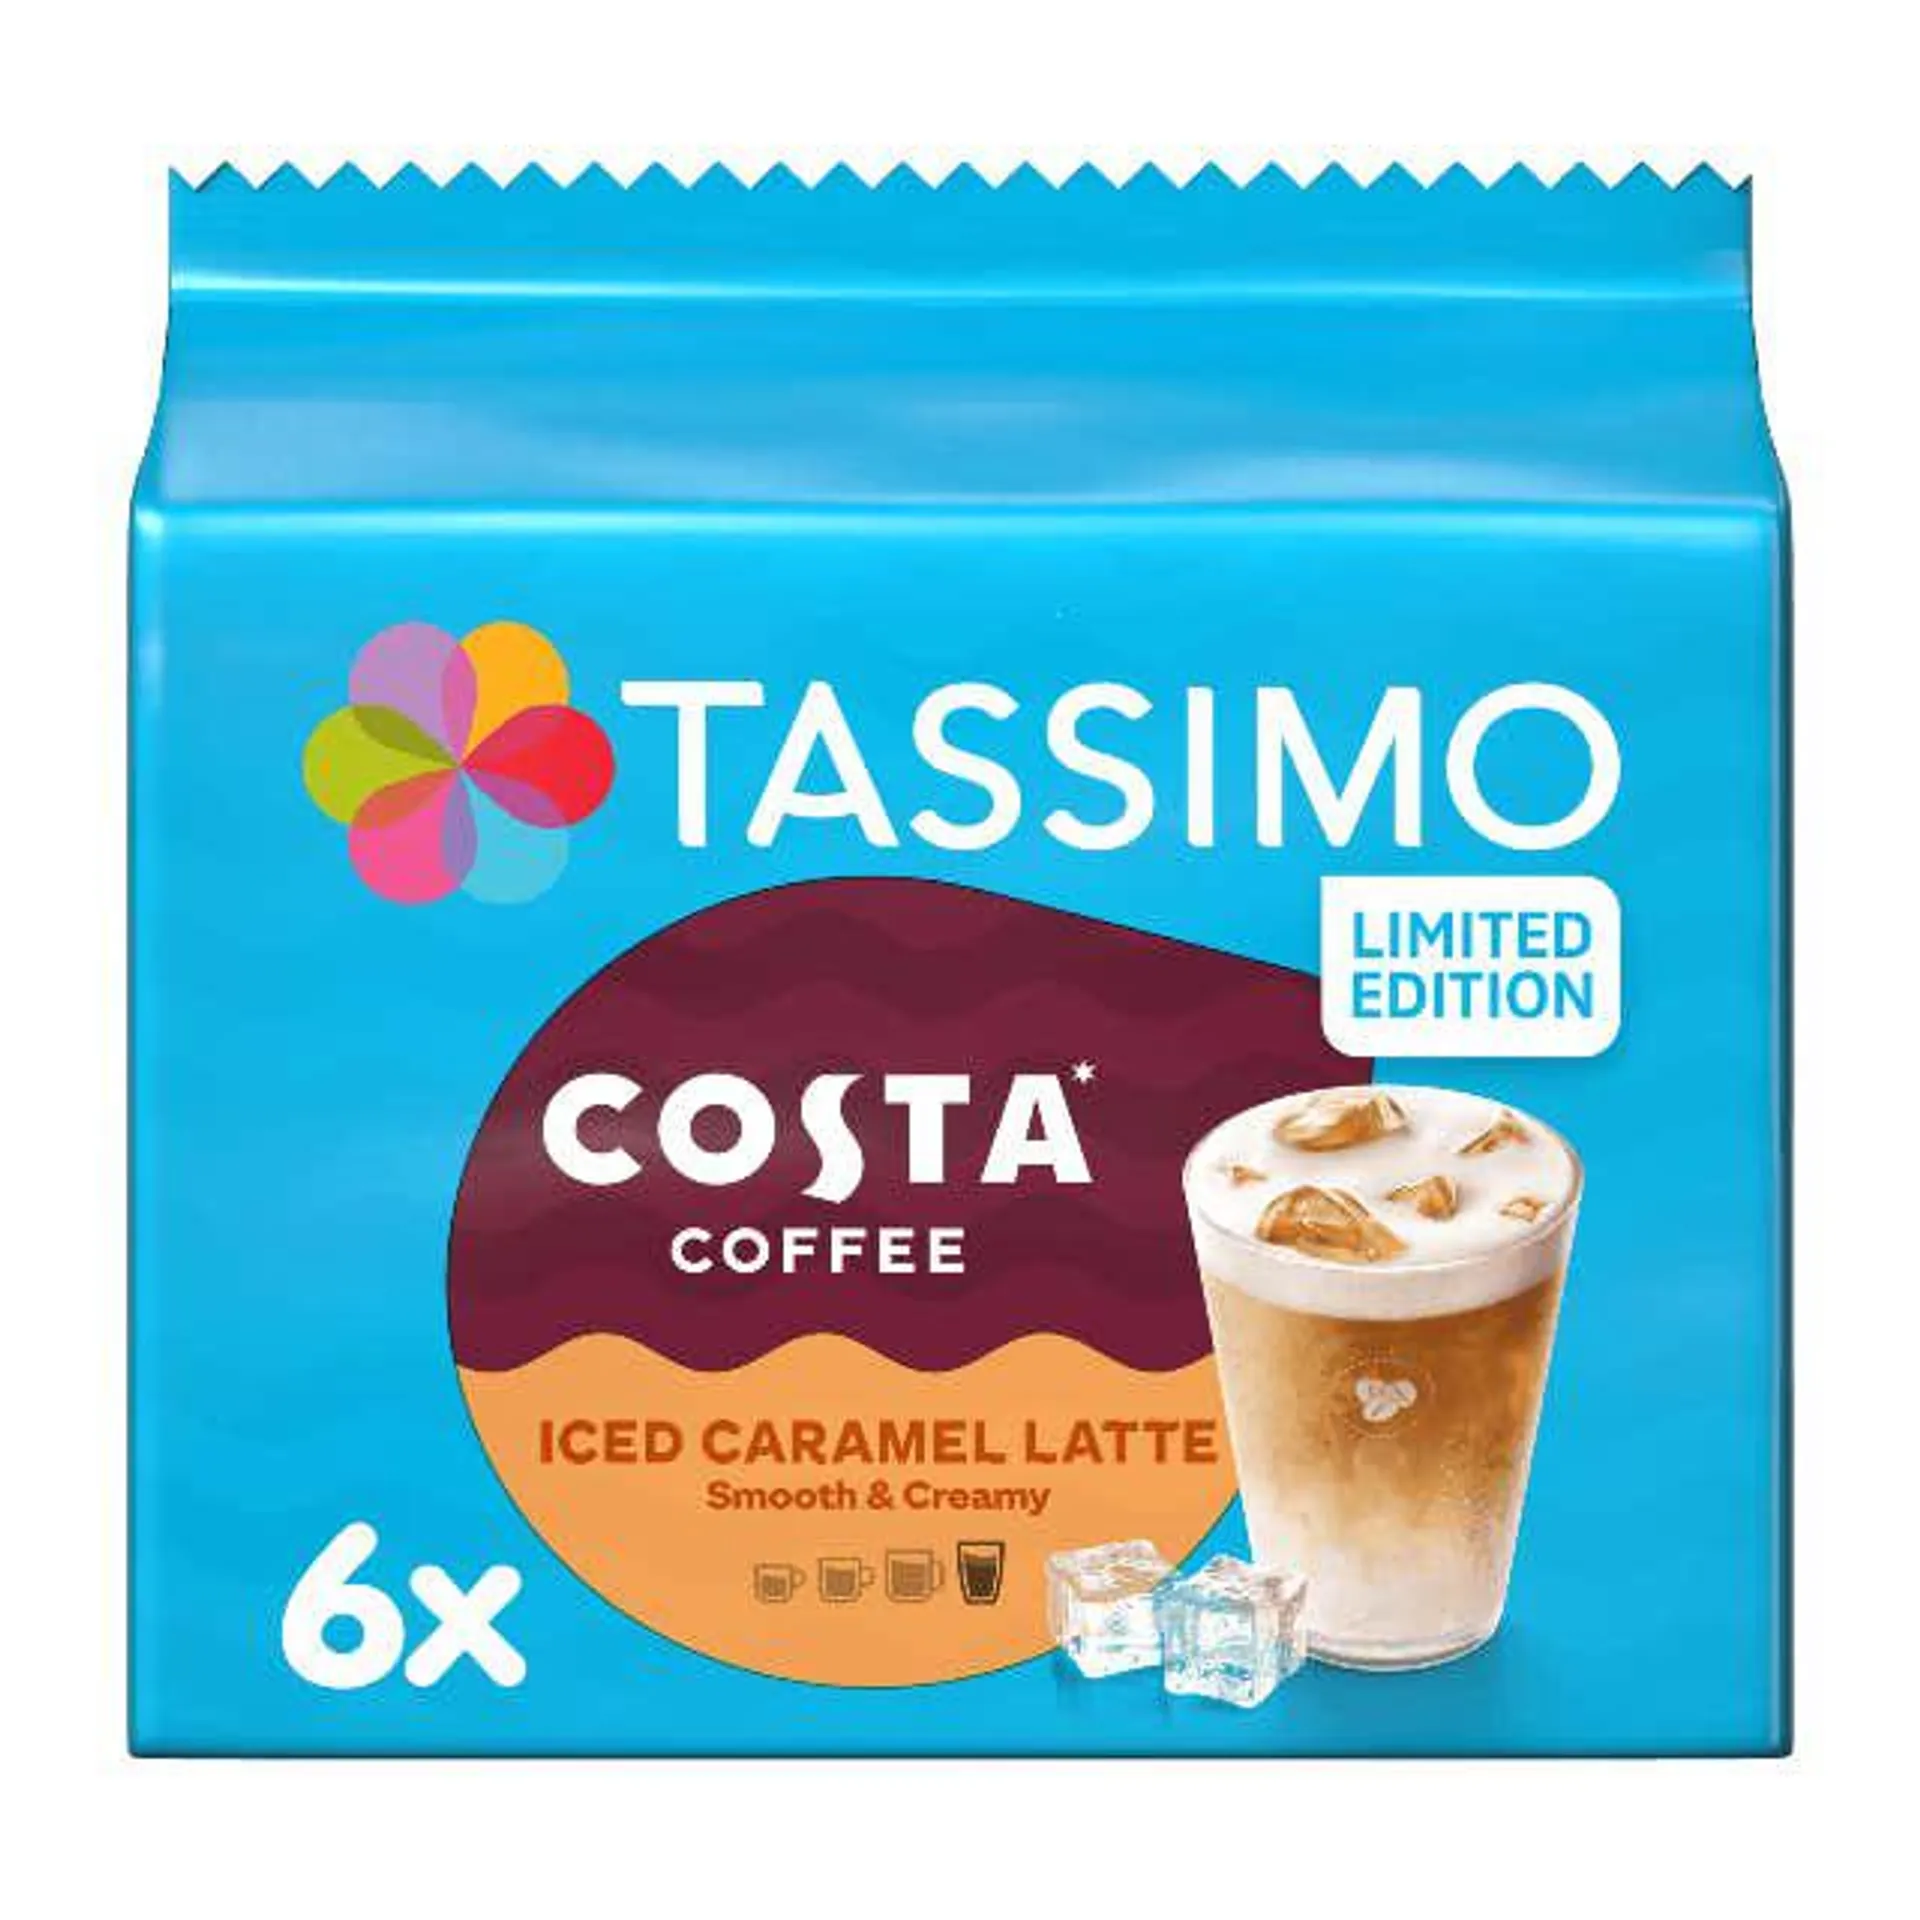 Costa Iced Caramel Latte